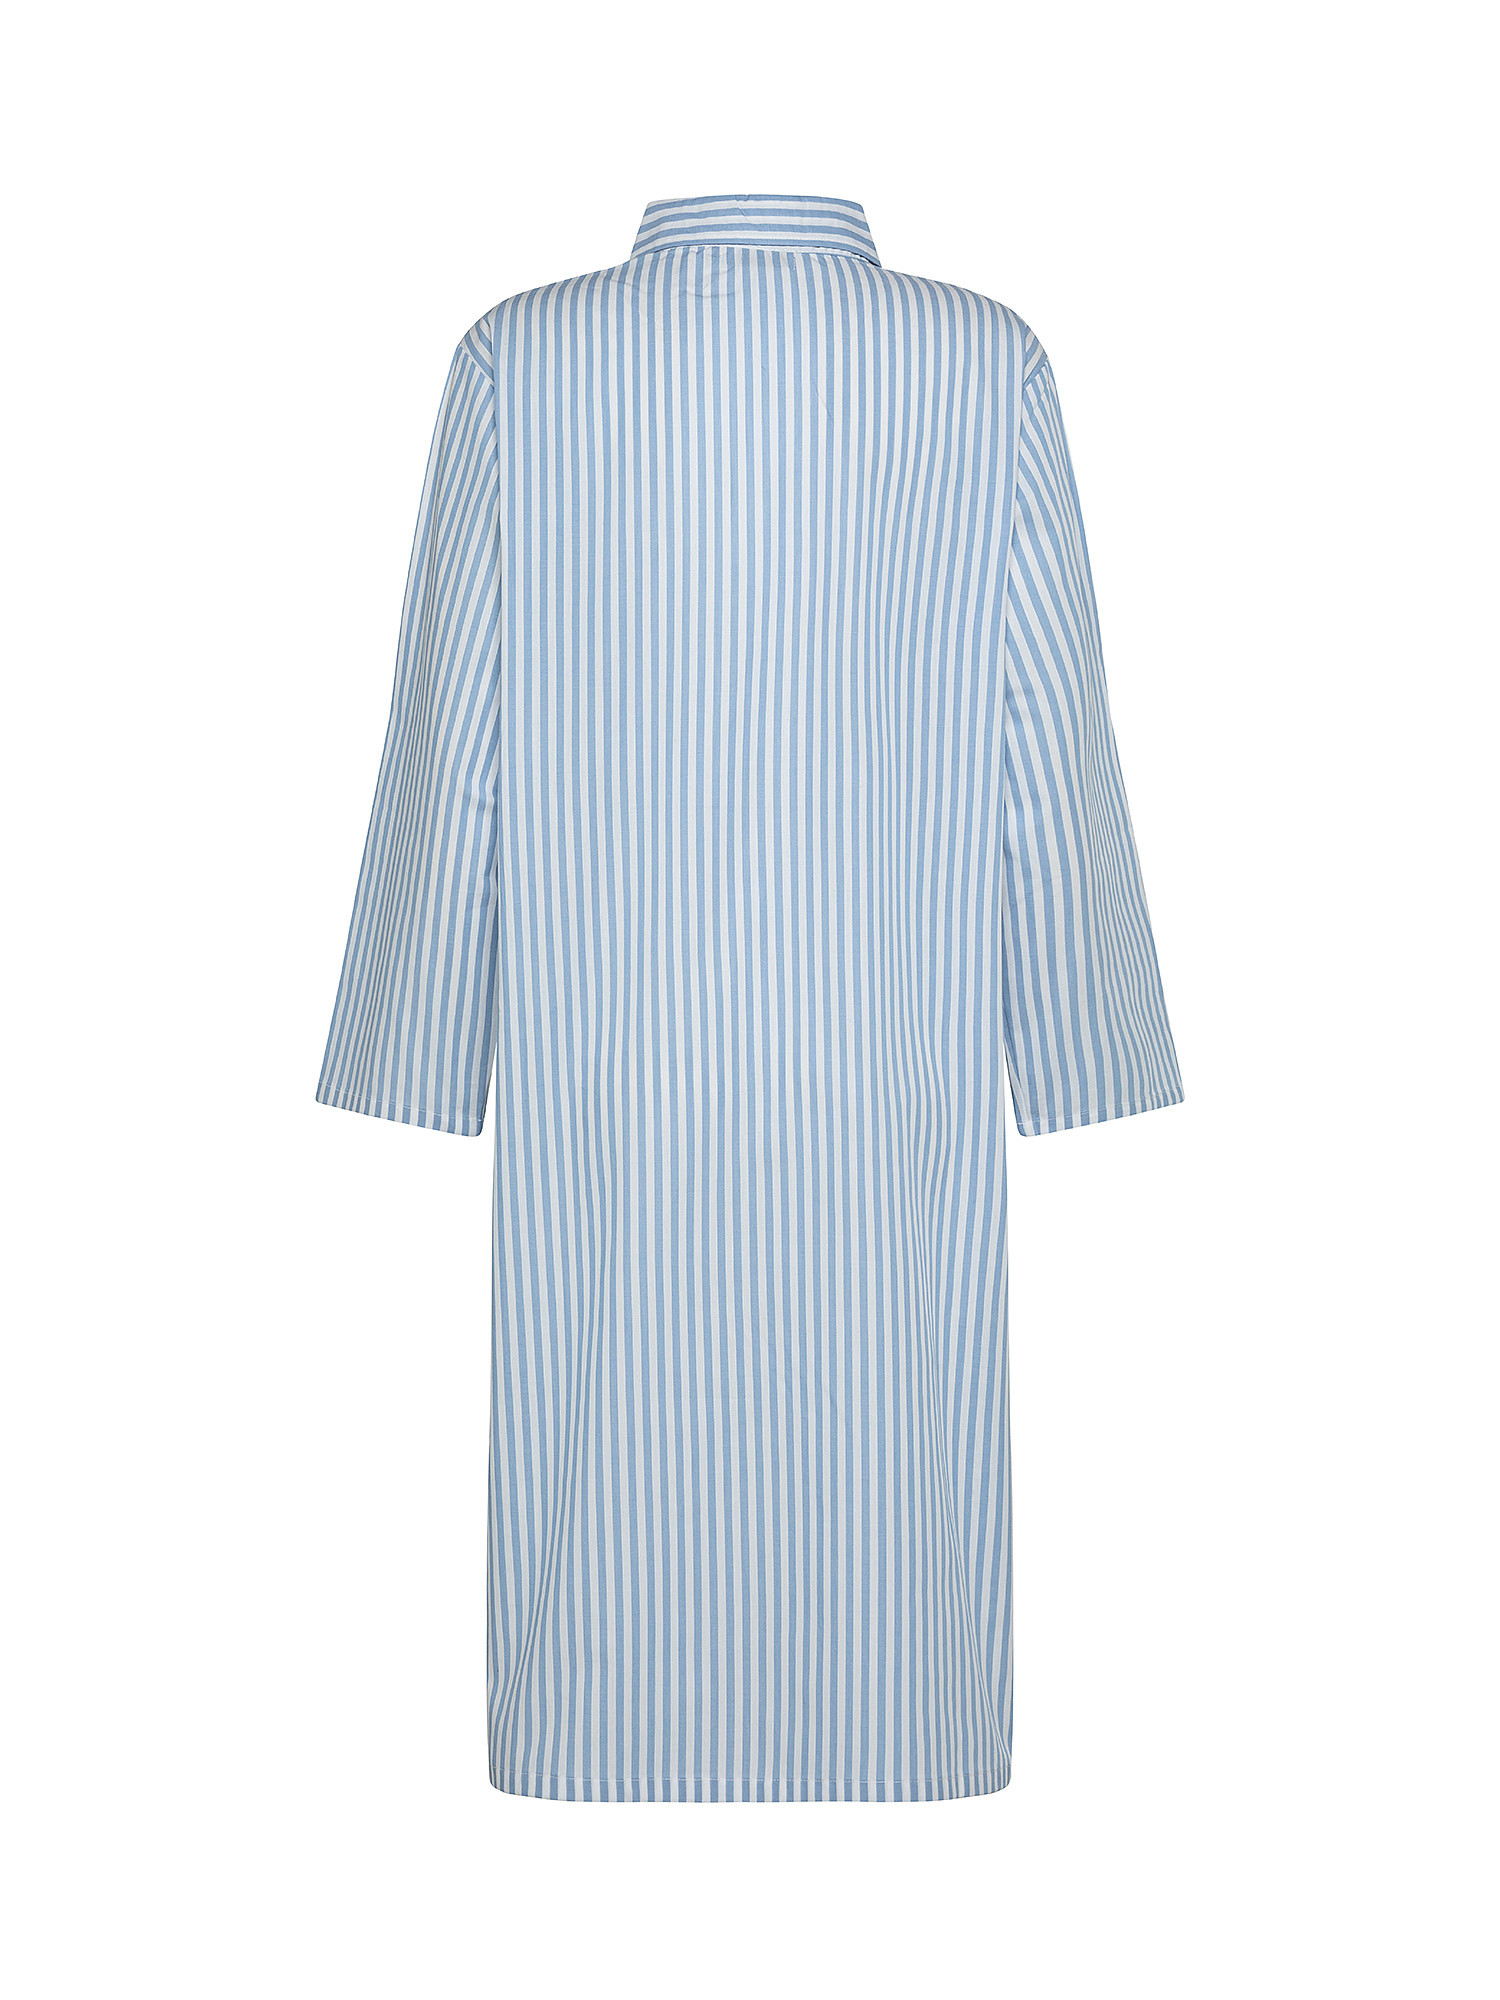 Checkered yarn-dyed cotton shirt dress, Light Blue, large image number 1